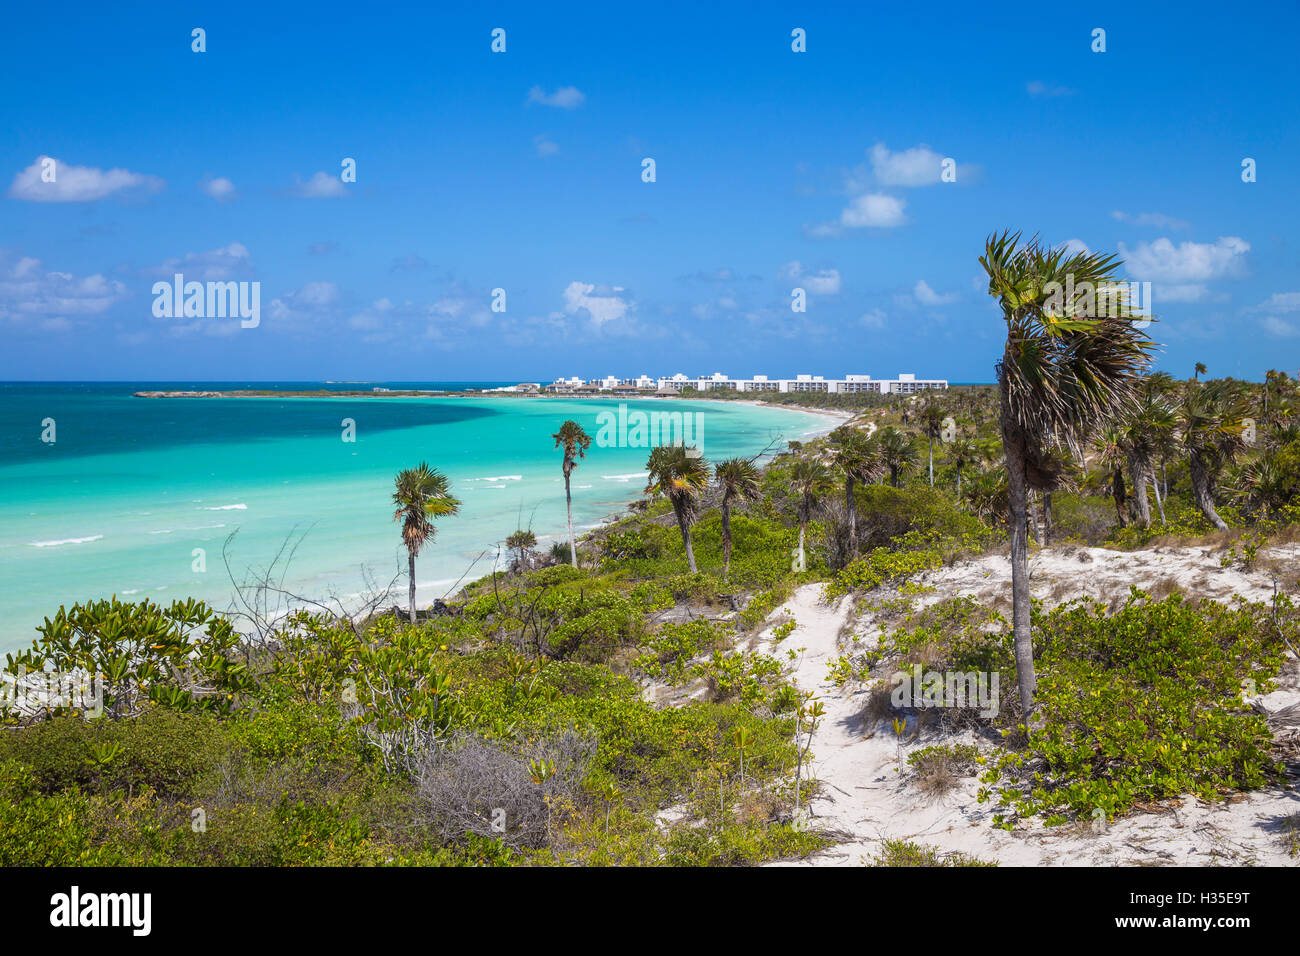 Playa Pilar, Cayo Guillermo, Jardines del Rey, province de Ciego de Avila, Cuba, Antilles, Caraïbes Banque D'Images